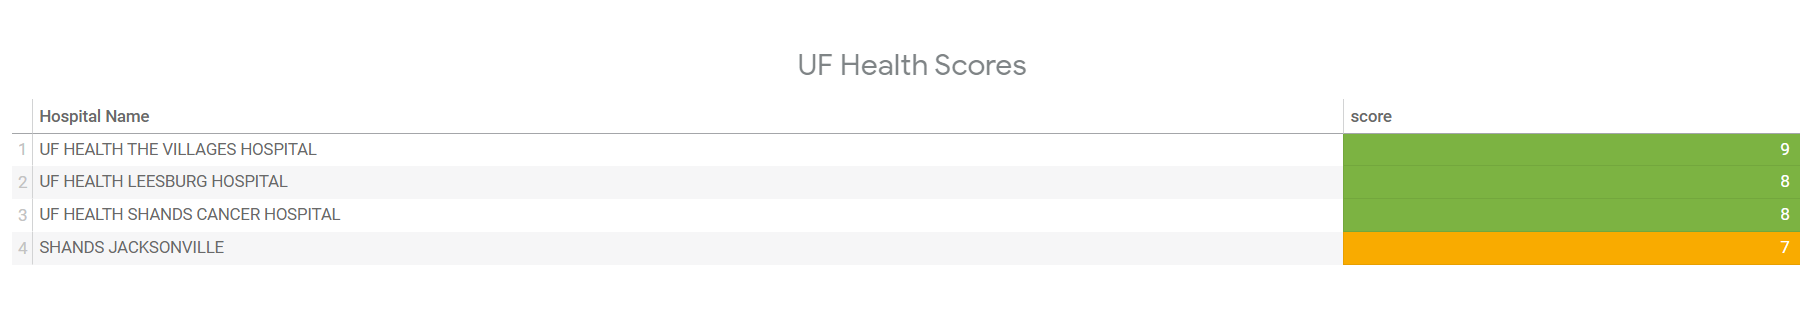 UF Health Scores